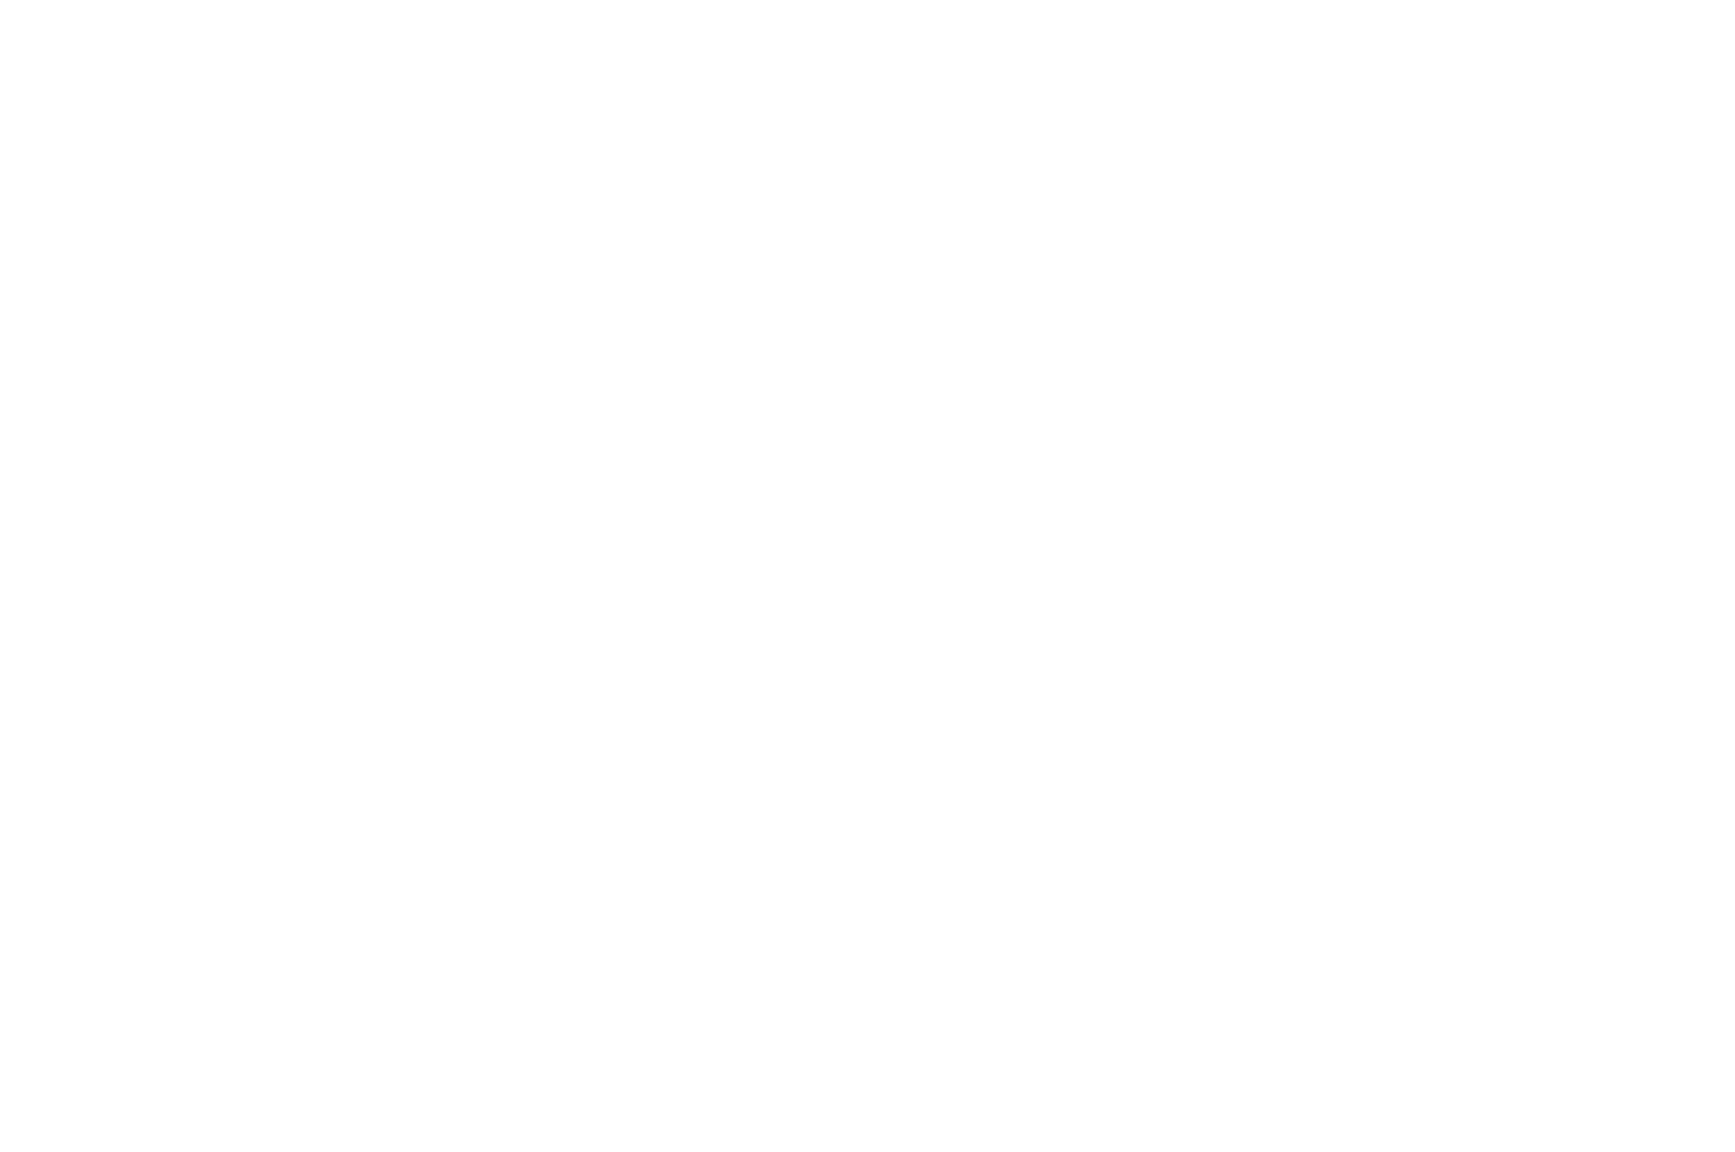 Best International Feature - Polish International Film Festival - Finalist 2022 (1)